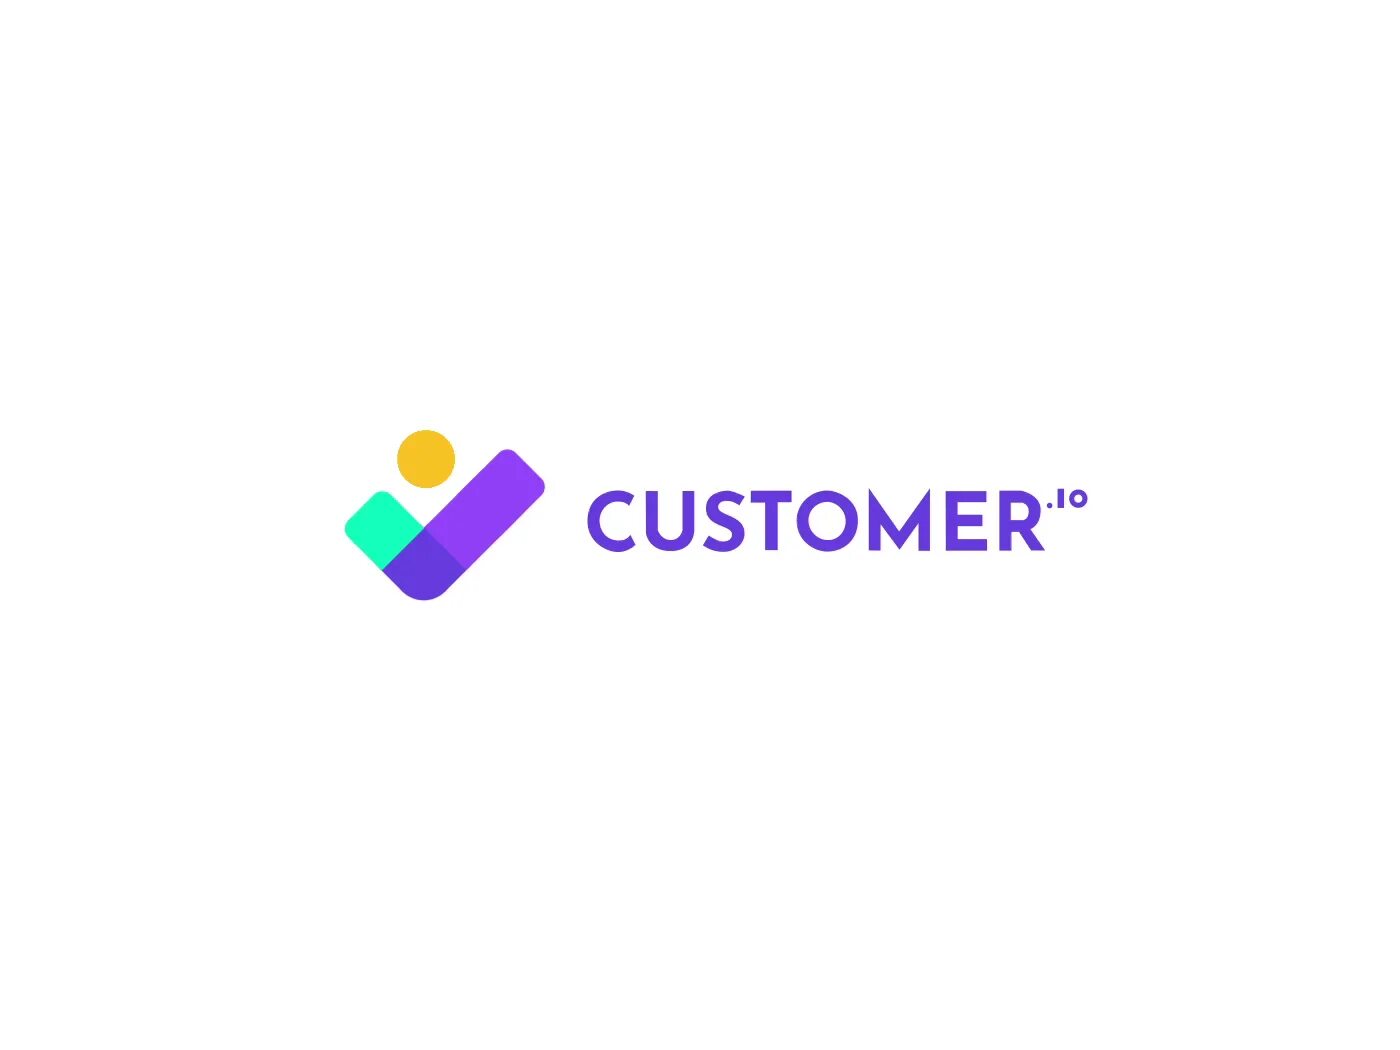 Customer io logo. Full best animation logos Мастеркард. Мастеркард PNG без фона. Логотип ио приглашение. Logos io